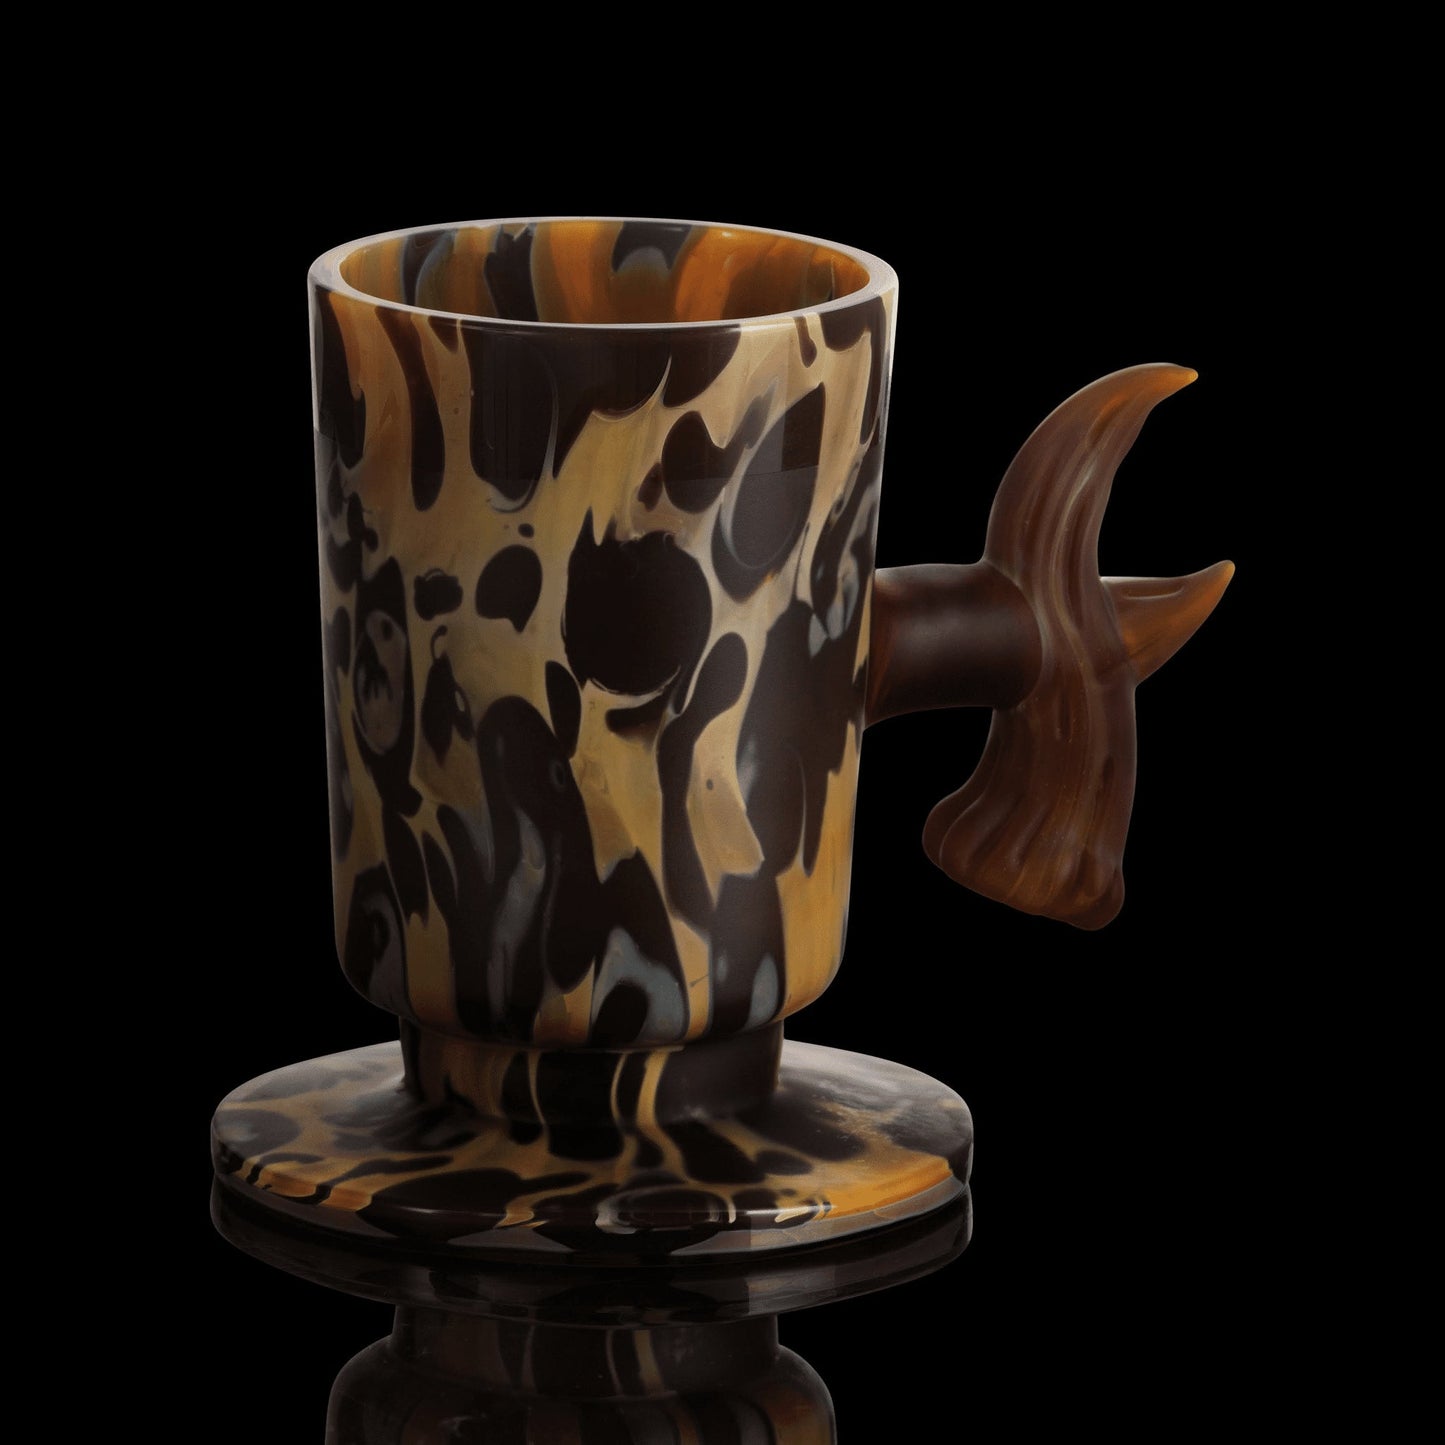 premium quality design of the Mushroom Tea Cup by Elks That Run (SCOPE 2022)